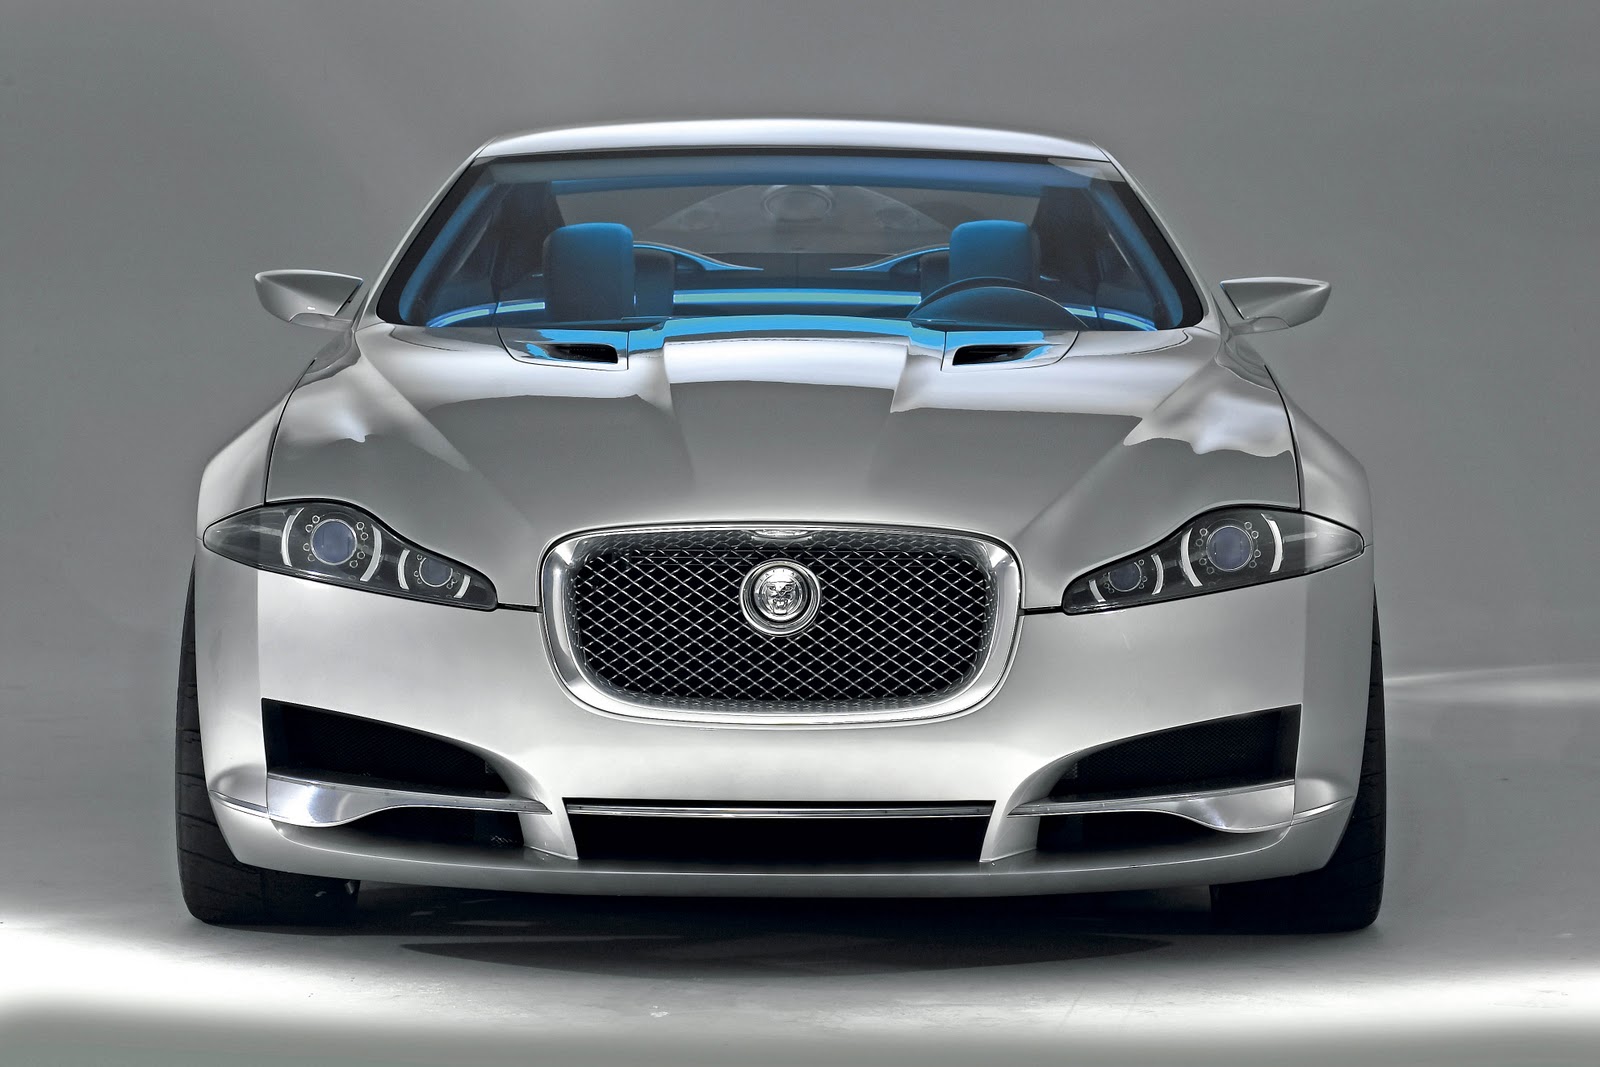 New Hd Wallon Jaguar Xj Hd Wallpaper Images, Photos, Reviews